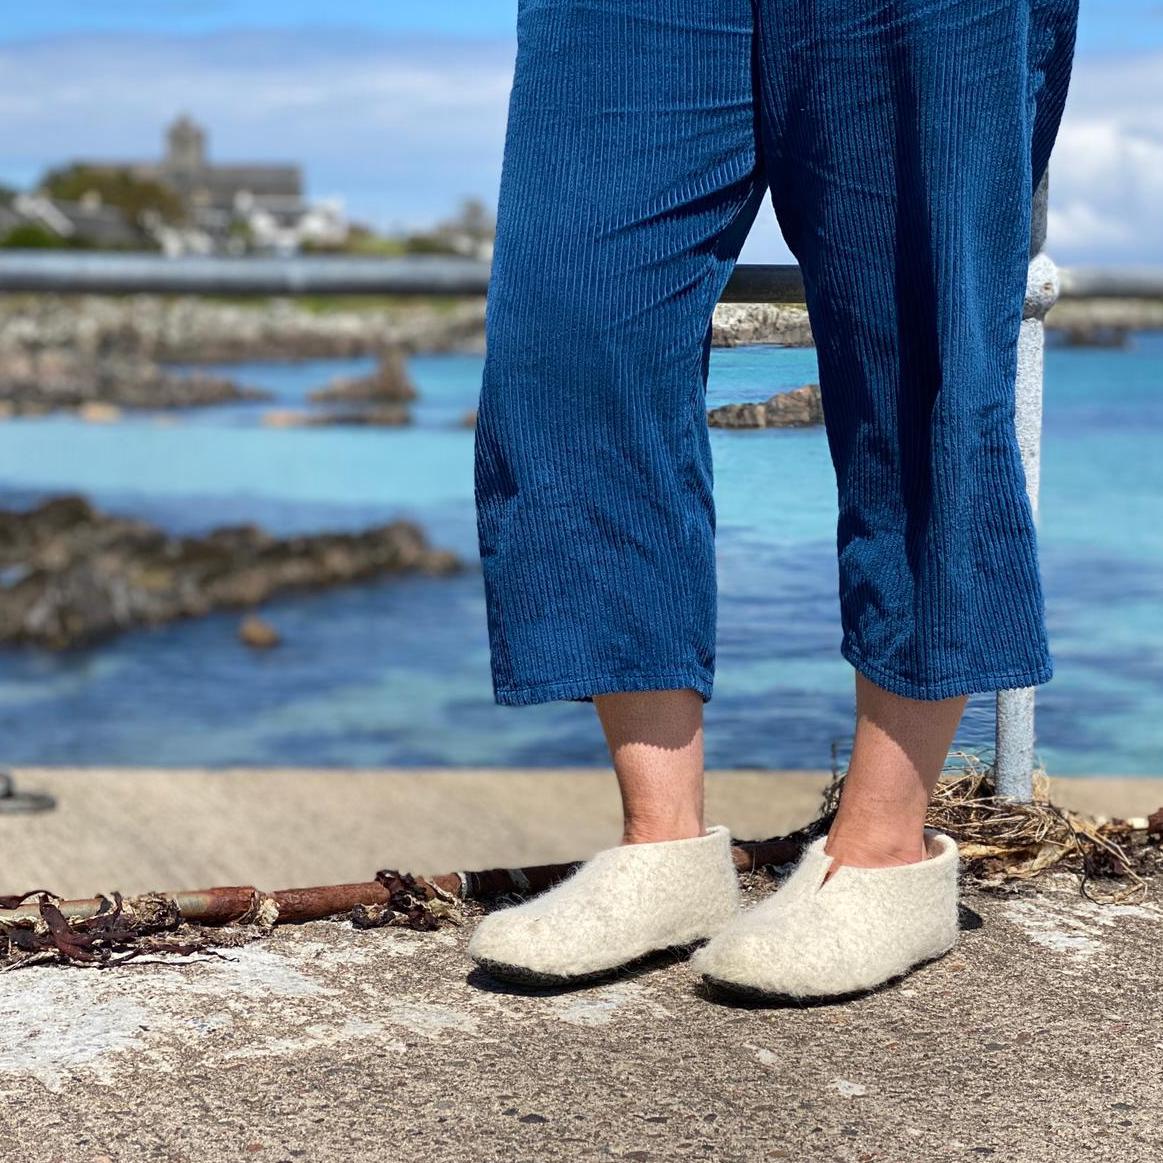 Iona Wool felted slippers - Full Heel, Natural Cream.